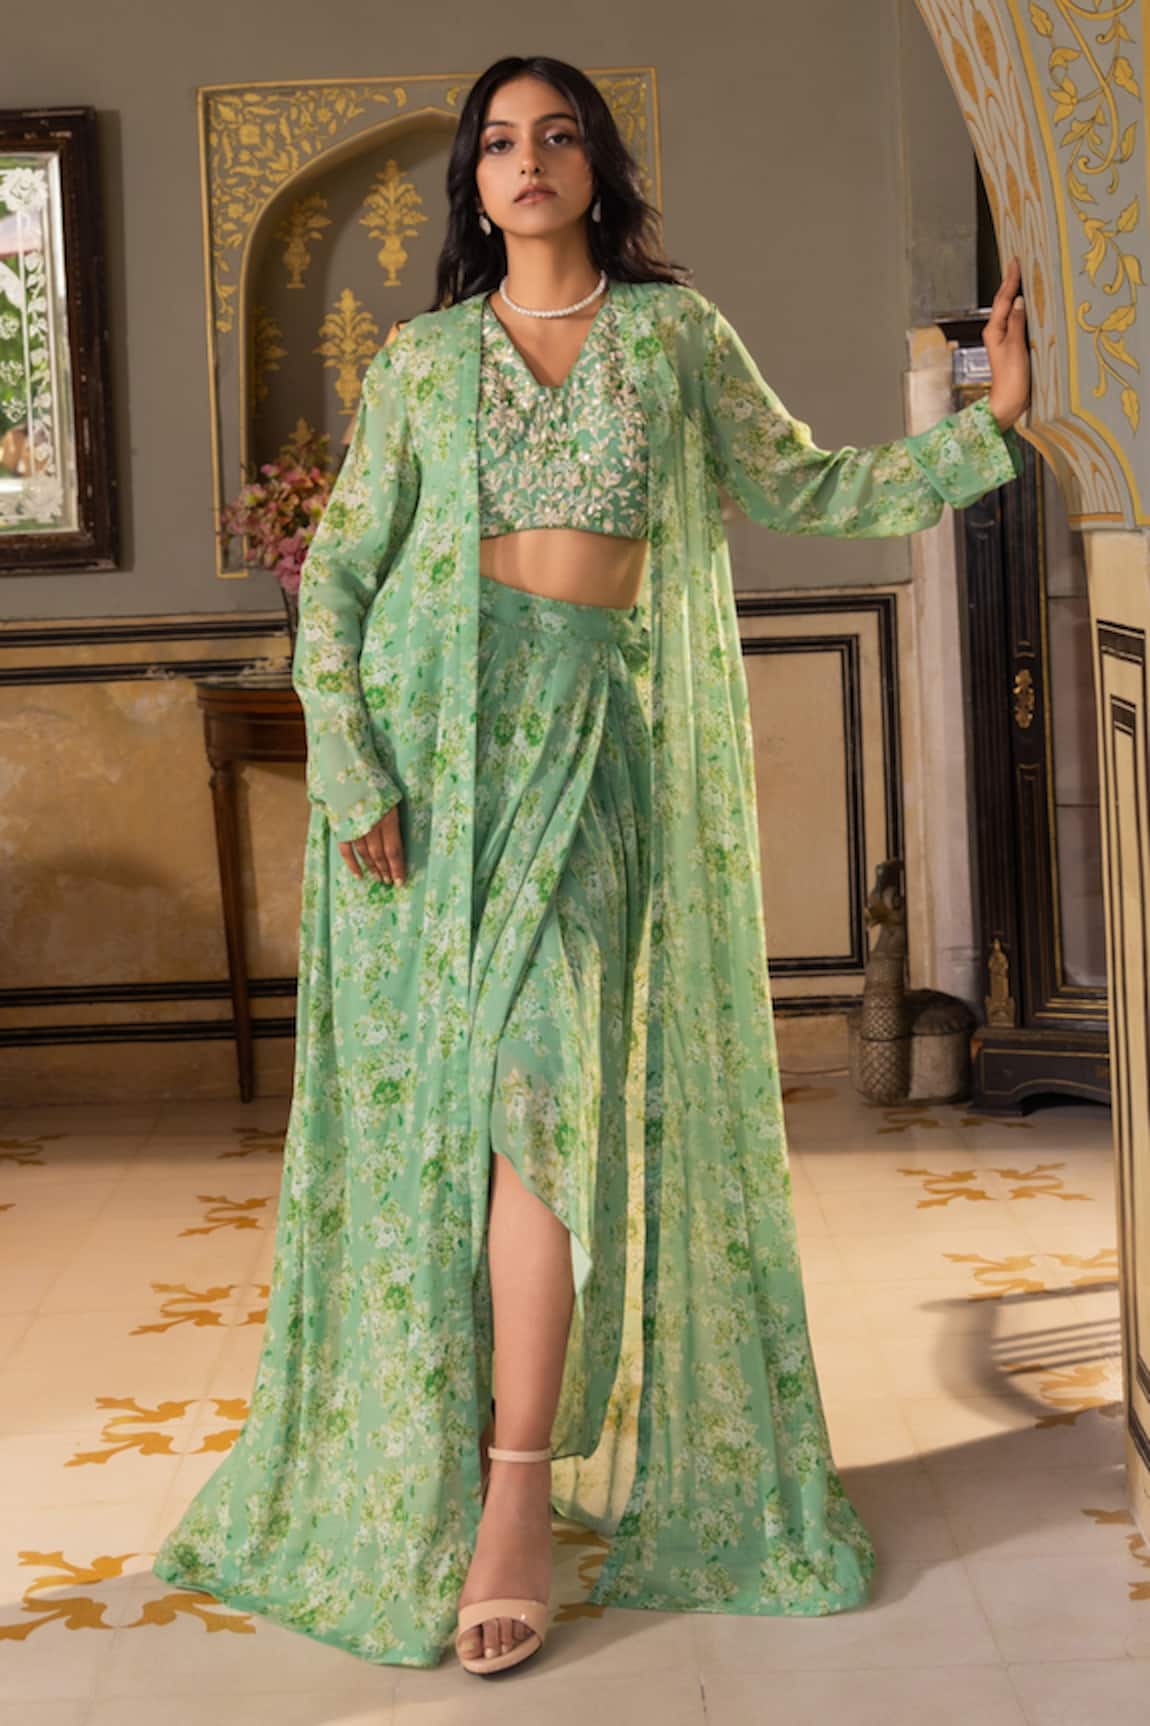 Suruchi Parakh Floral Print Jacket Draped Skirt Set